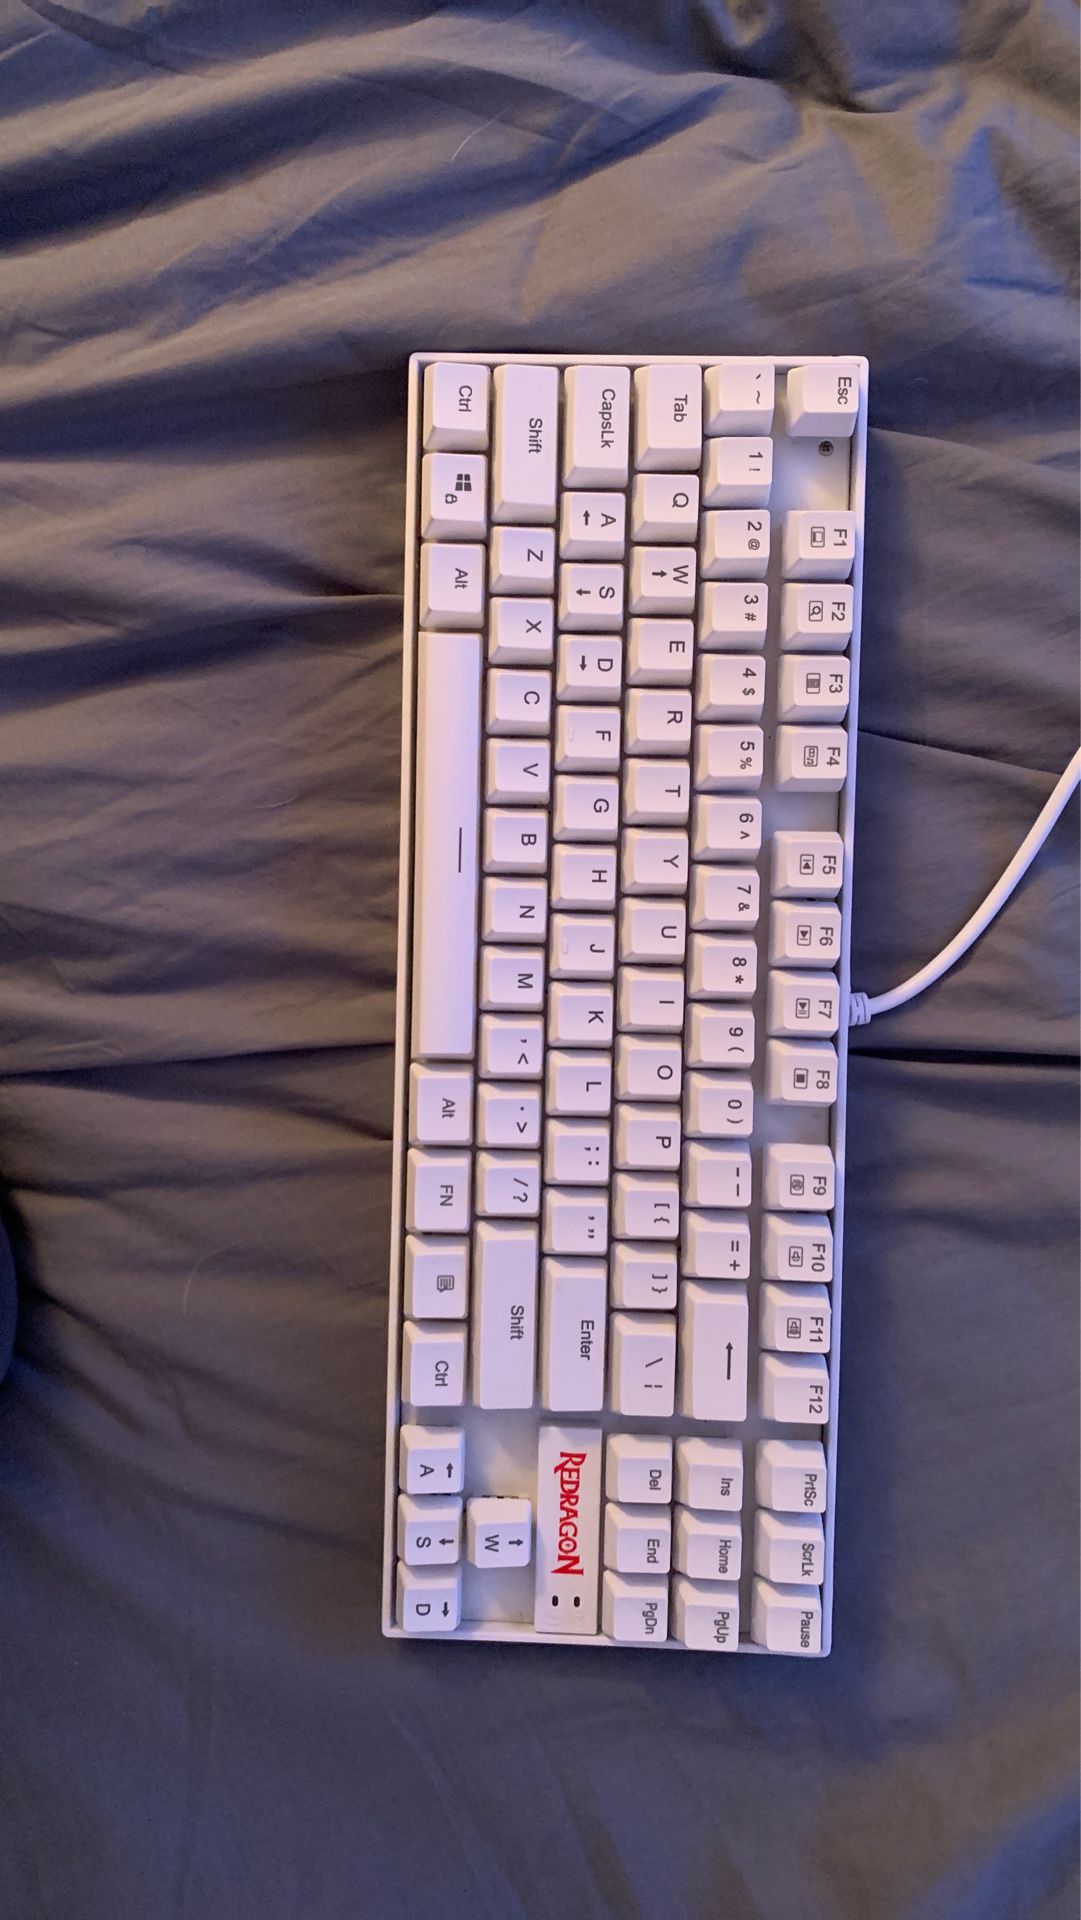 Red Dragon K552 mechanical keyboard (no backlight)